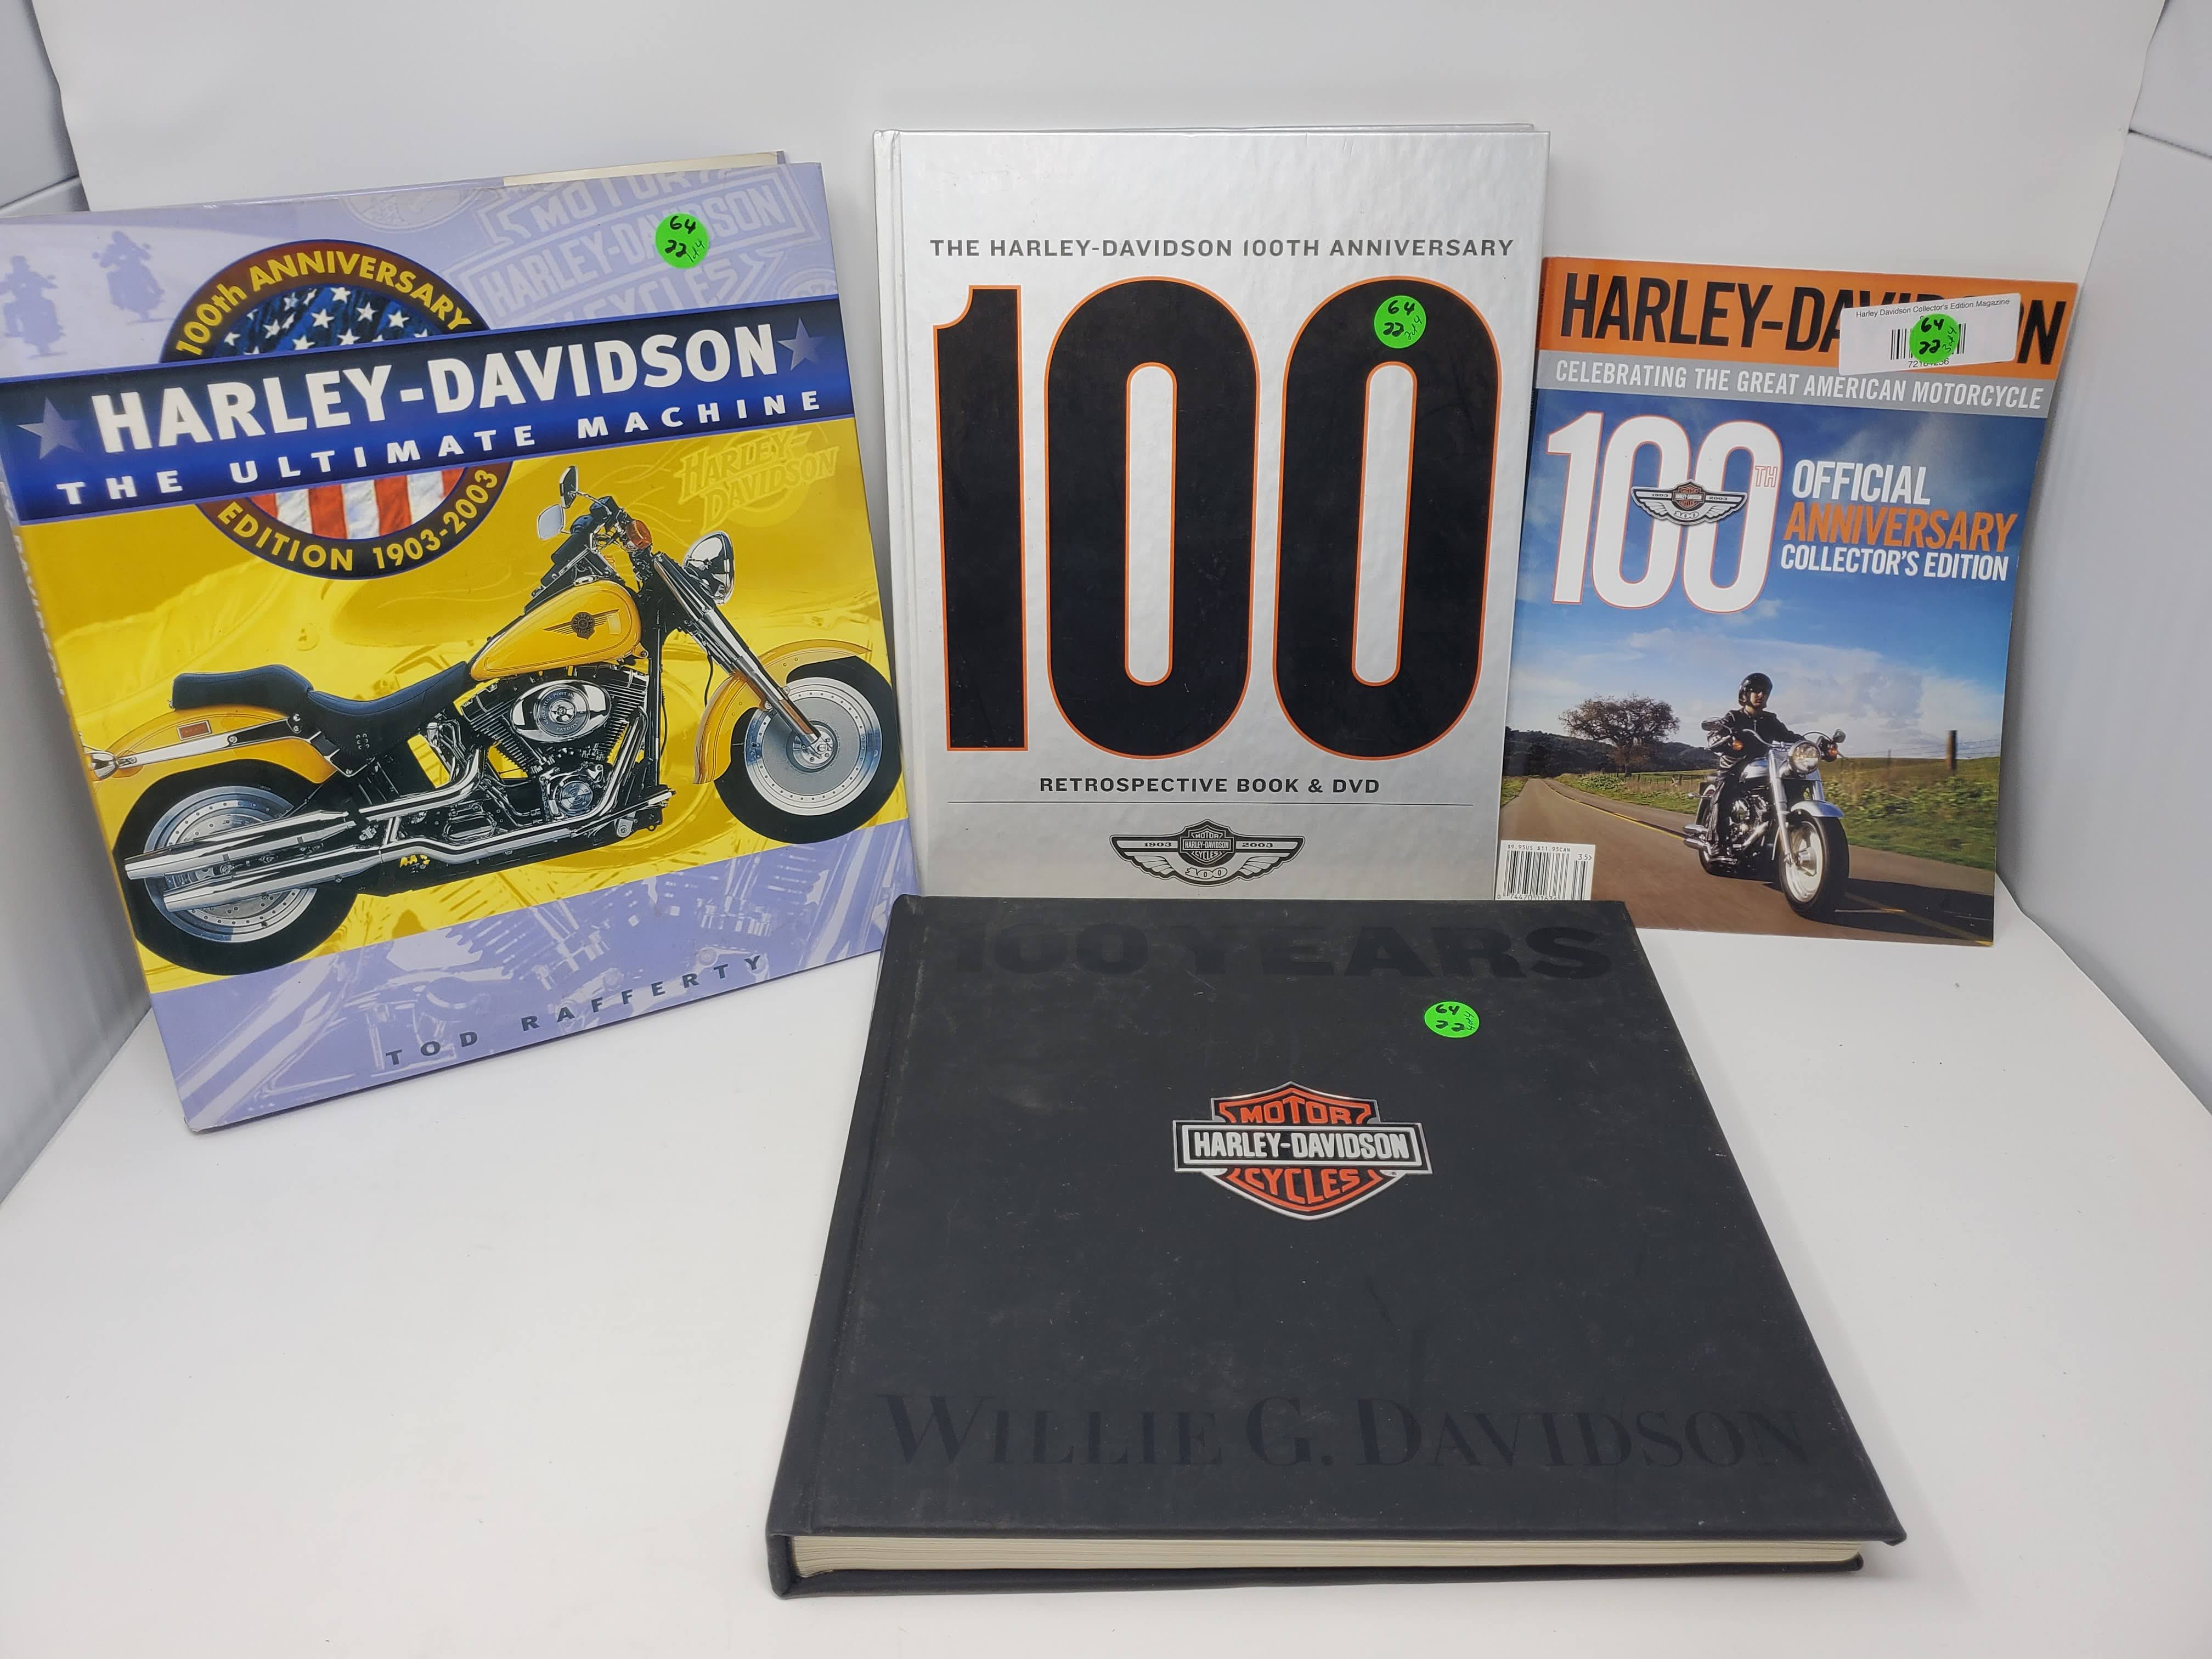 Vintage Collection of Commemorative Harley-Davidson History Books